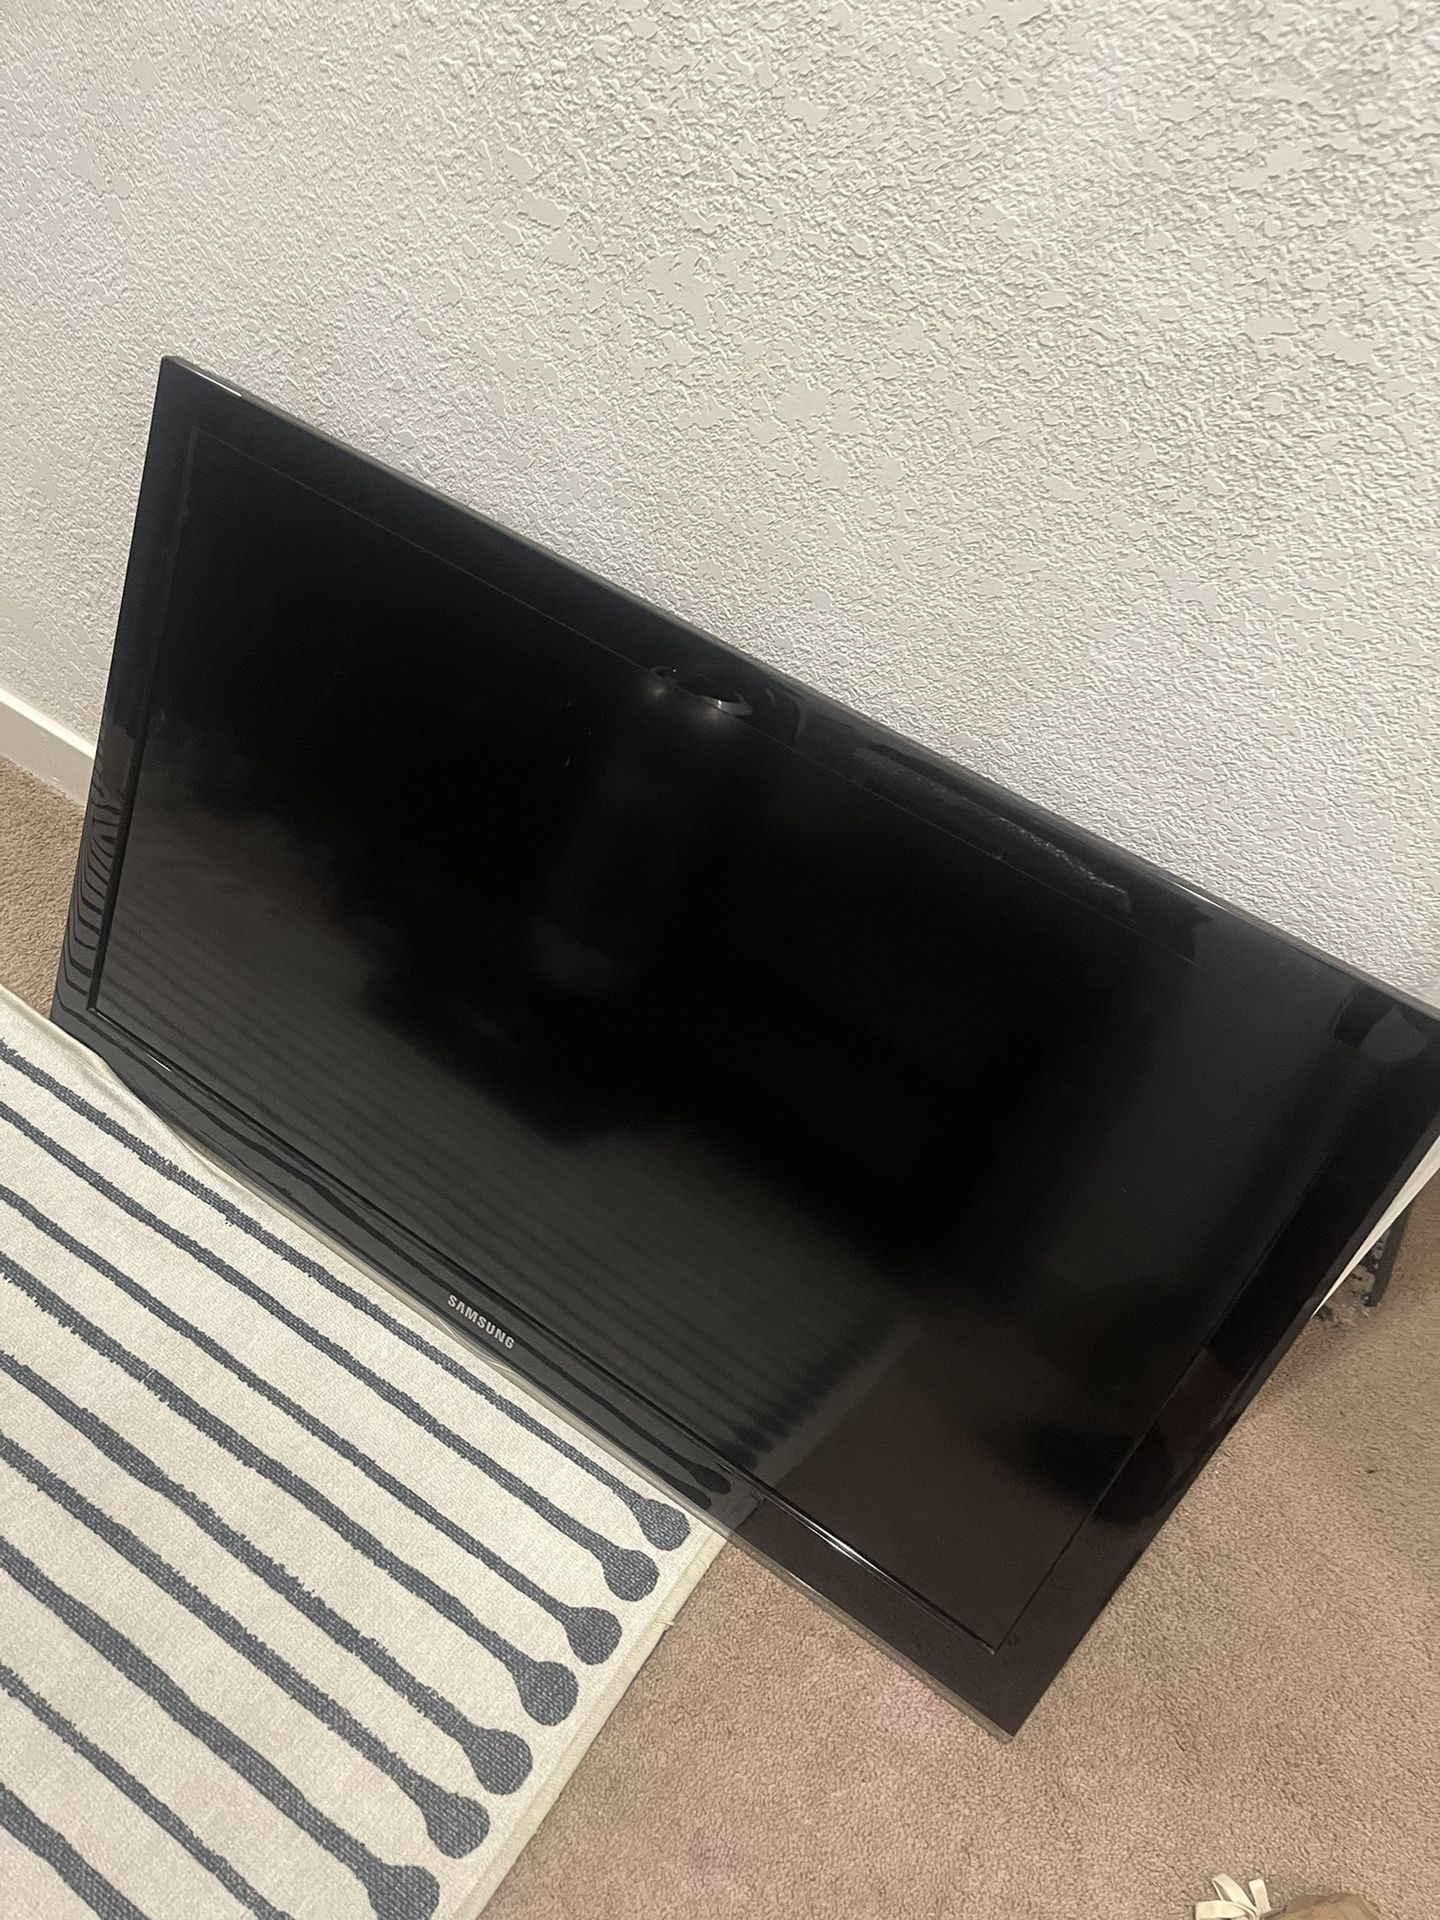 Samsung 38 Inch Tv With Chromecast 